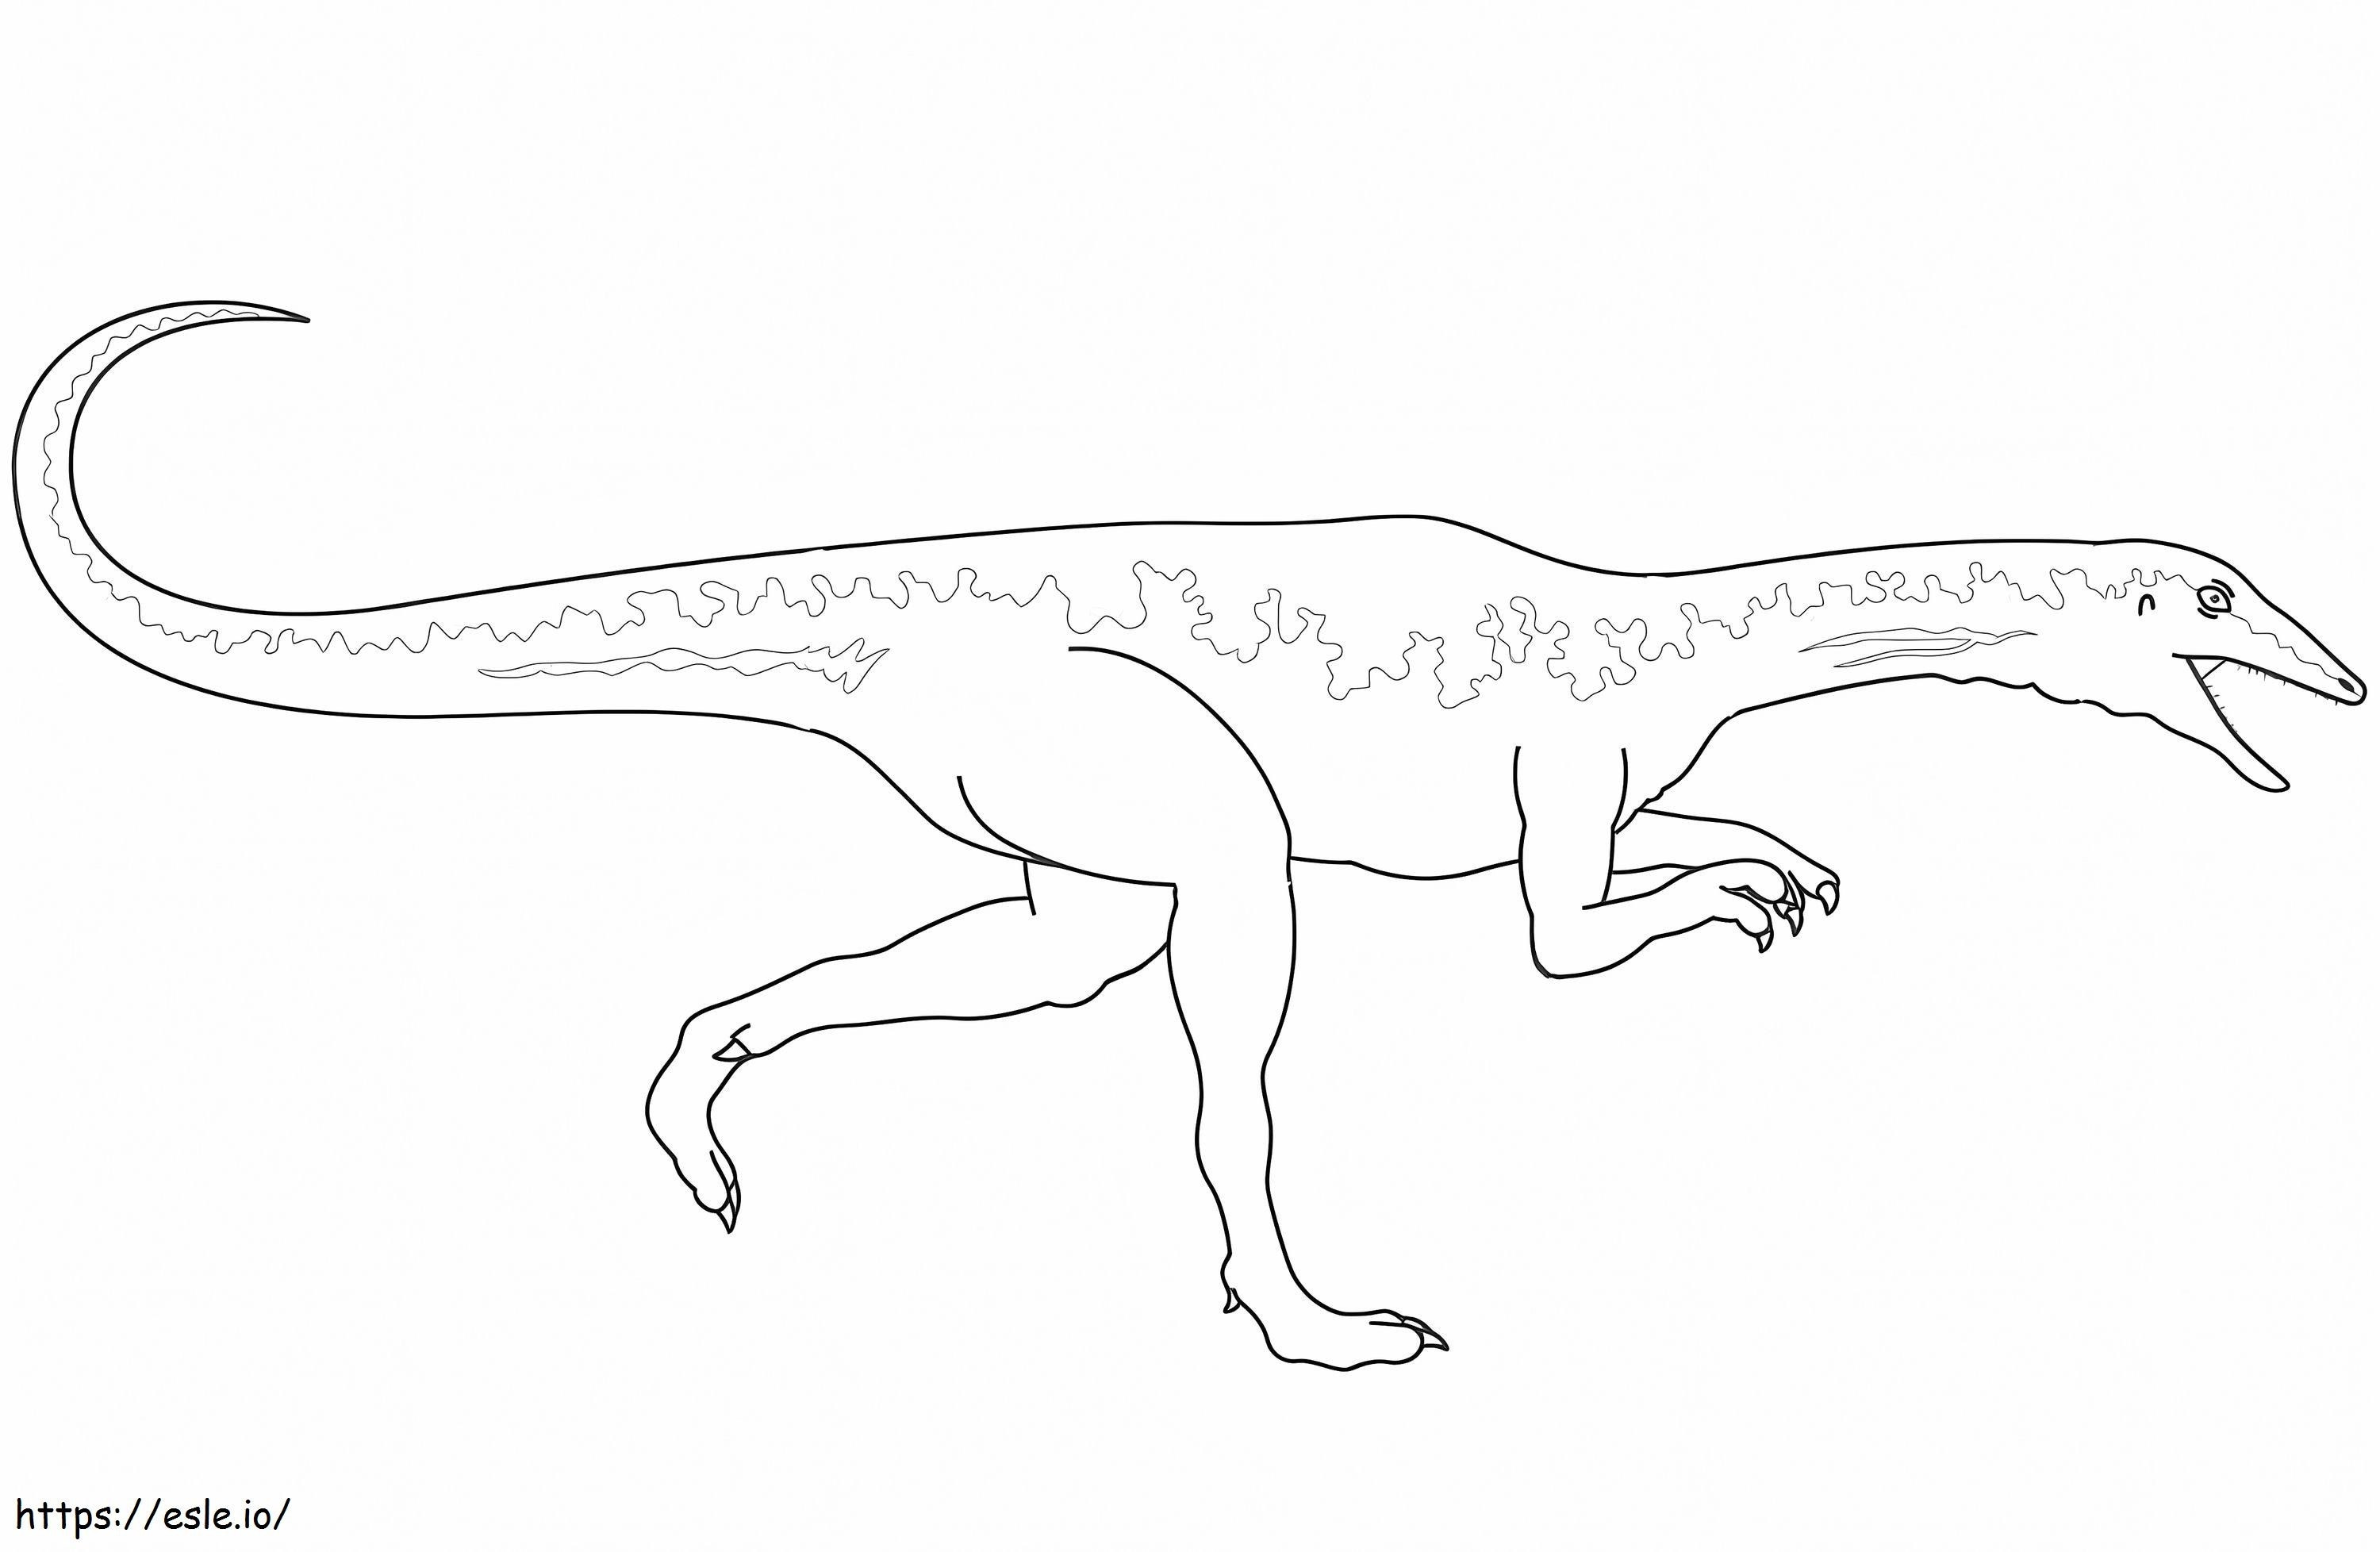 Dinosaur Velociraptor coloring page